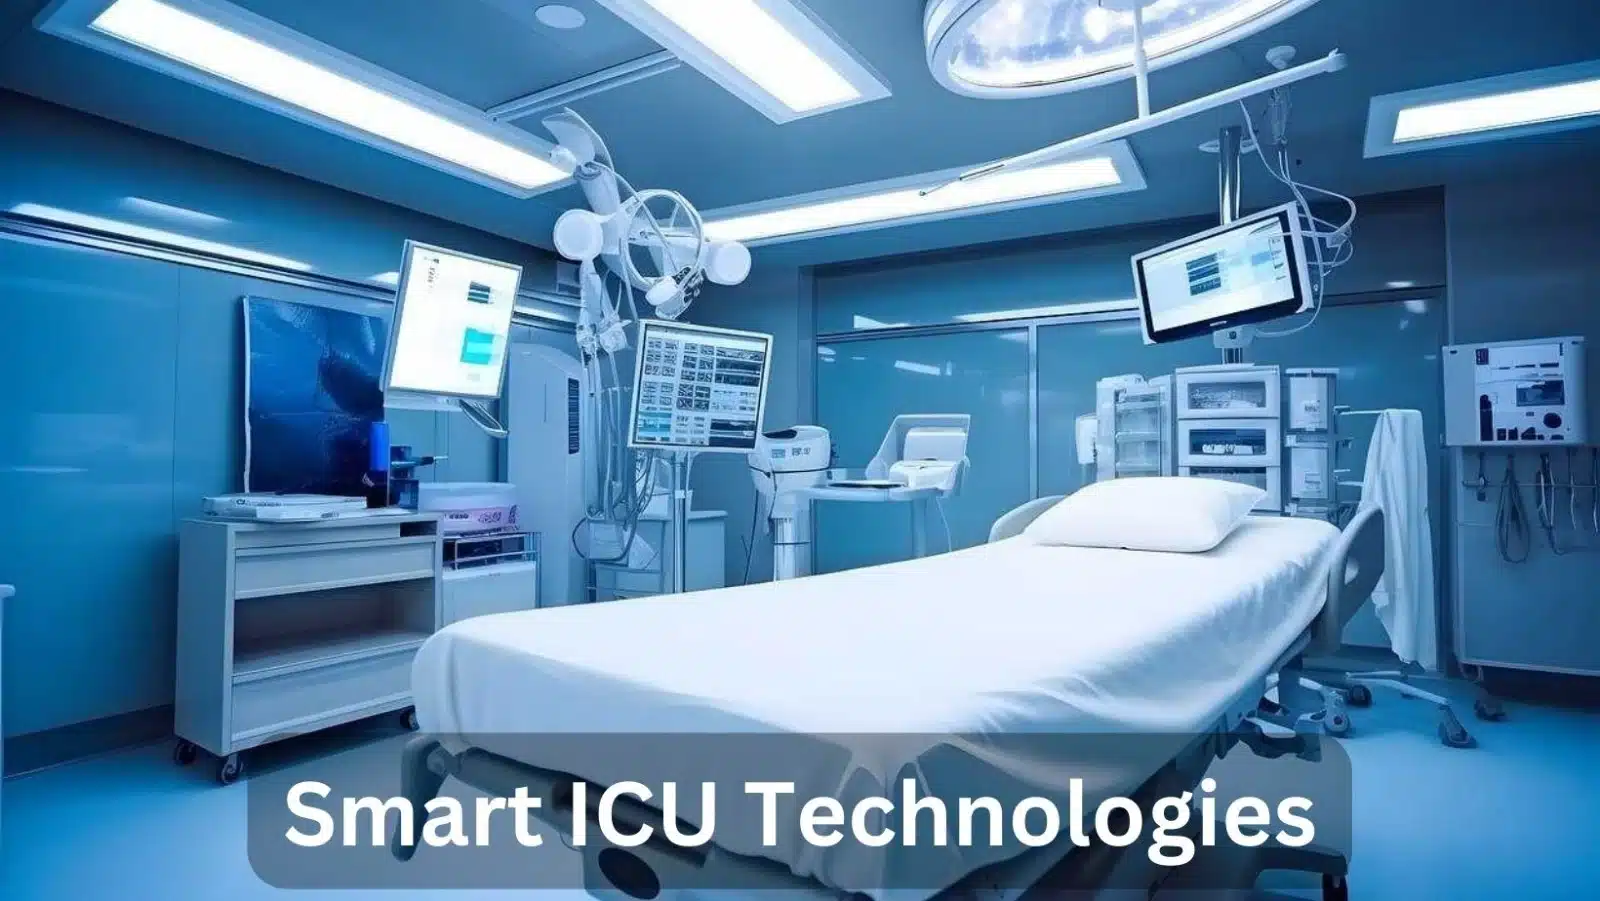 Benefits of Smart ICU Technologies